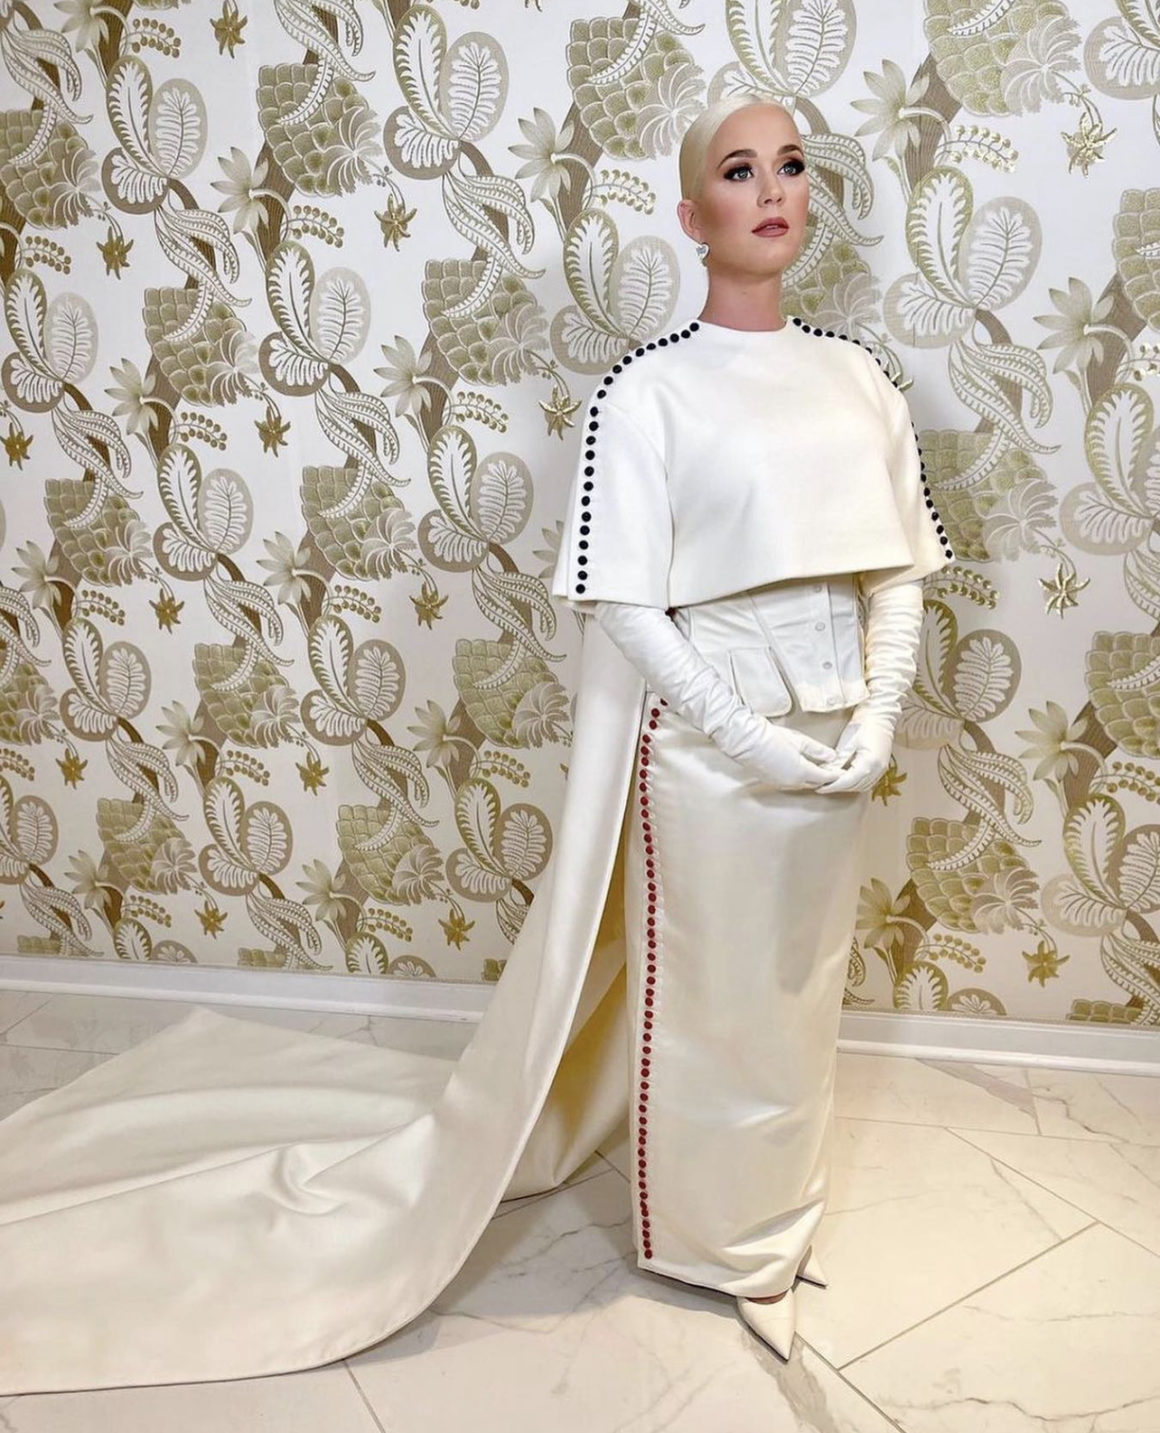 2021 Inauguration Celebrity Style: Jennifer Lopez in White ...